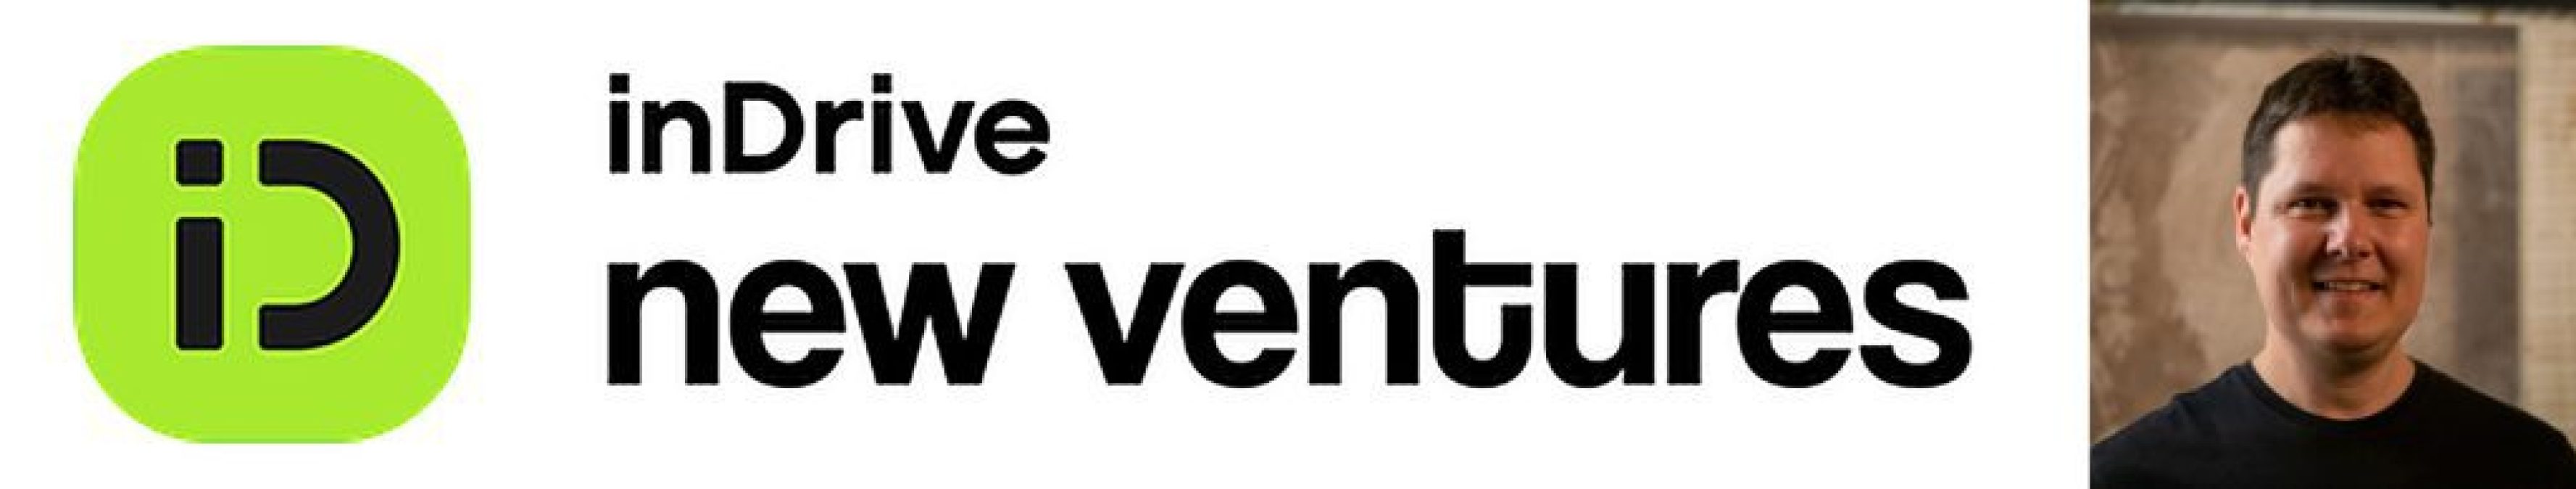 Indrive-Venture-Logo-1